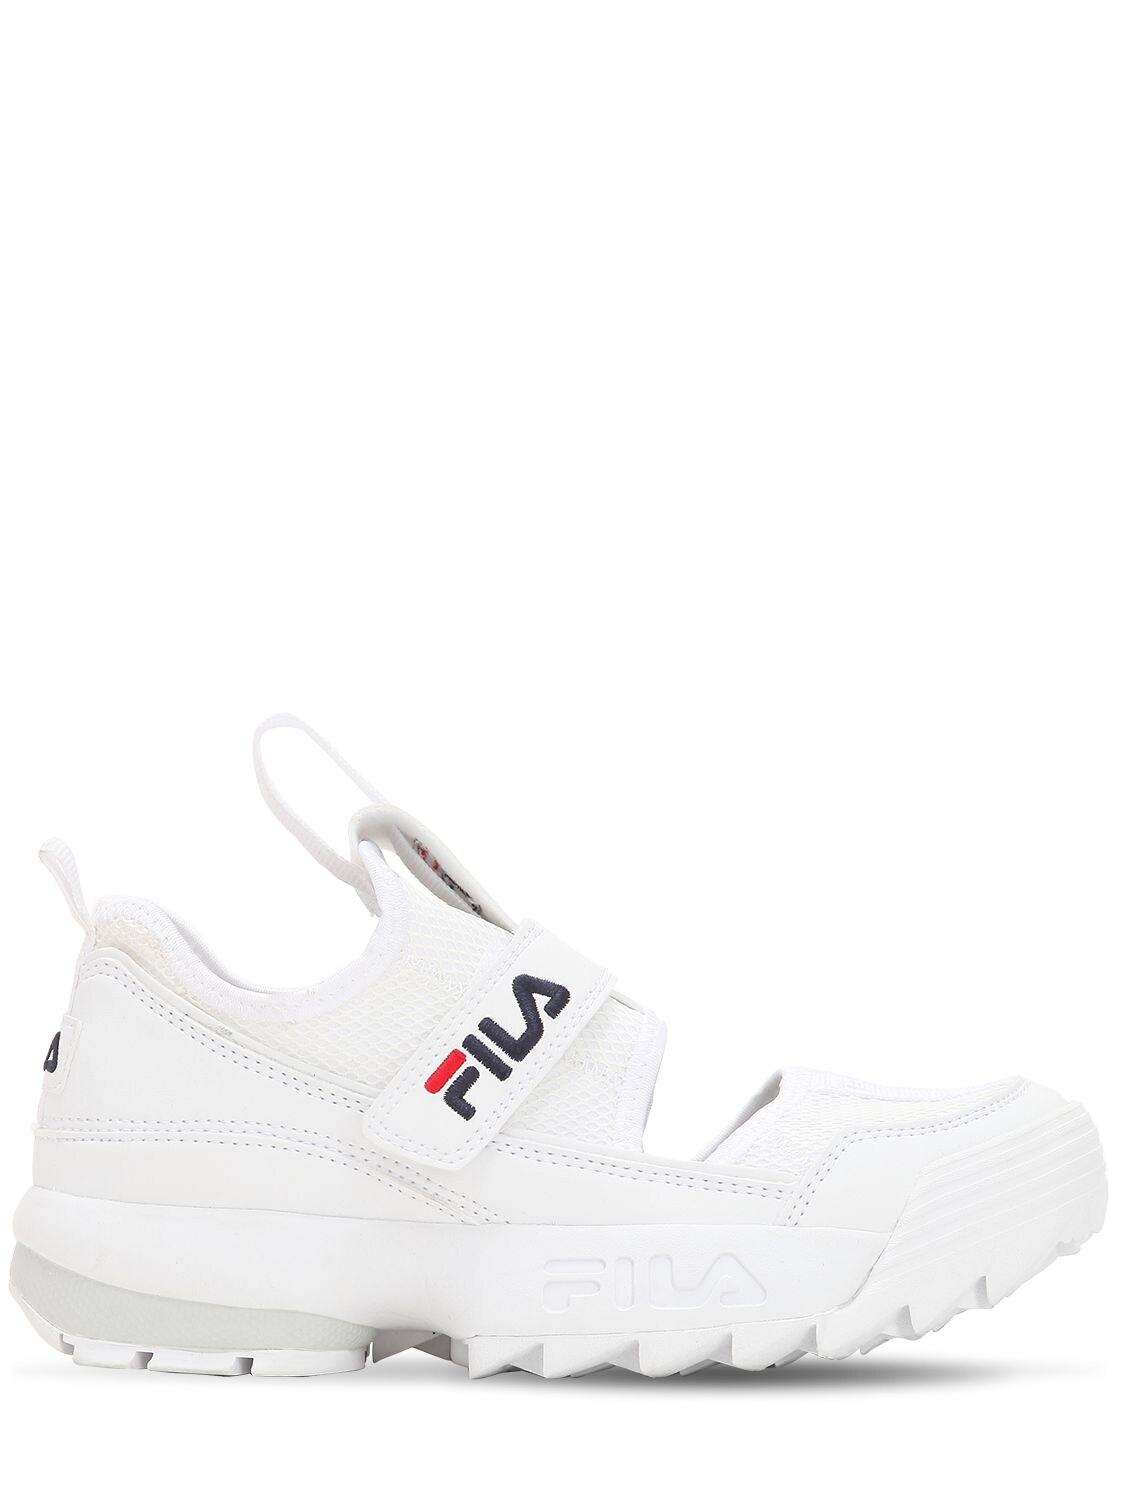 Fila Disruptor Half Sandal Flats in White | Lyst